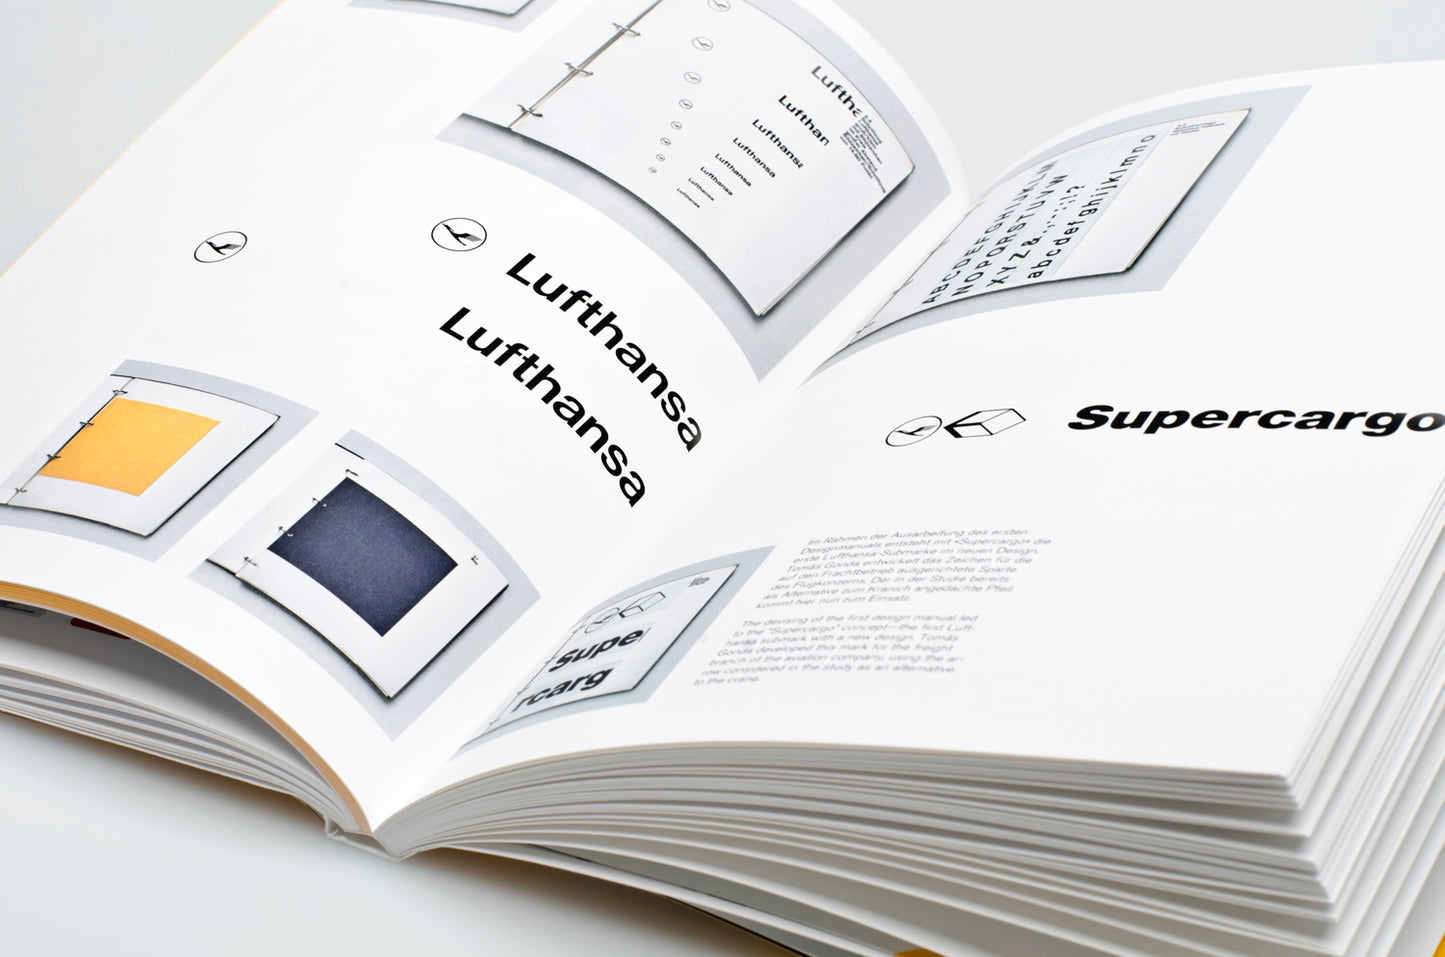 A505: Lufthansa + Graphic Design